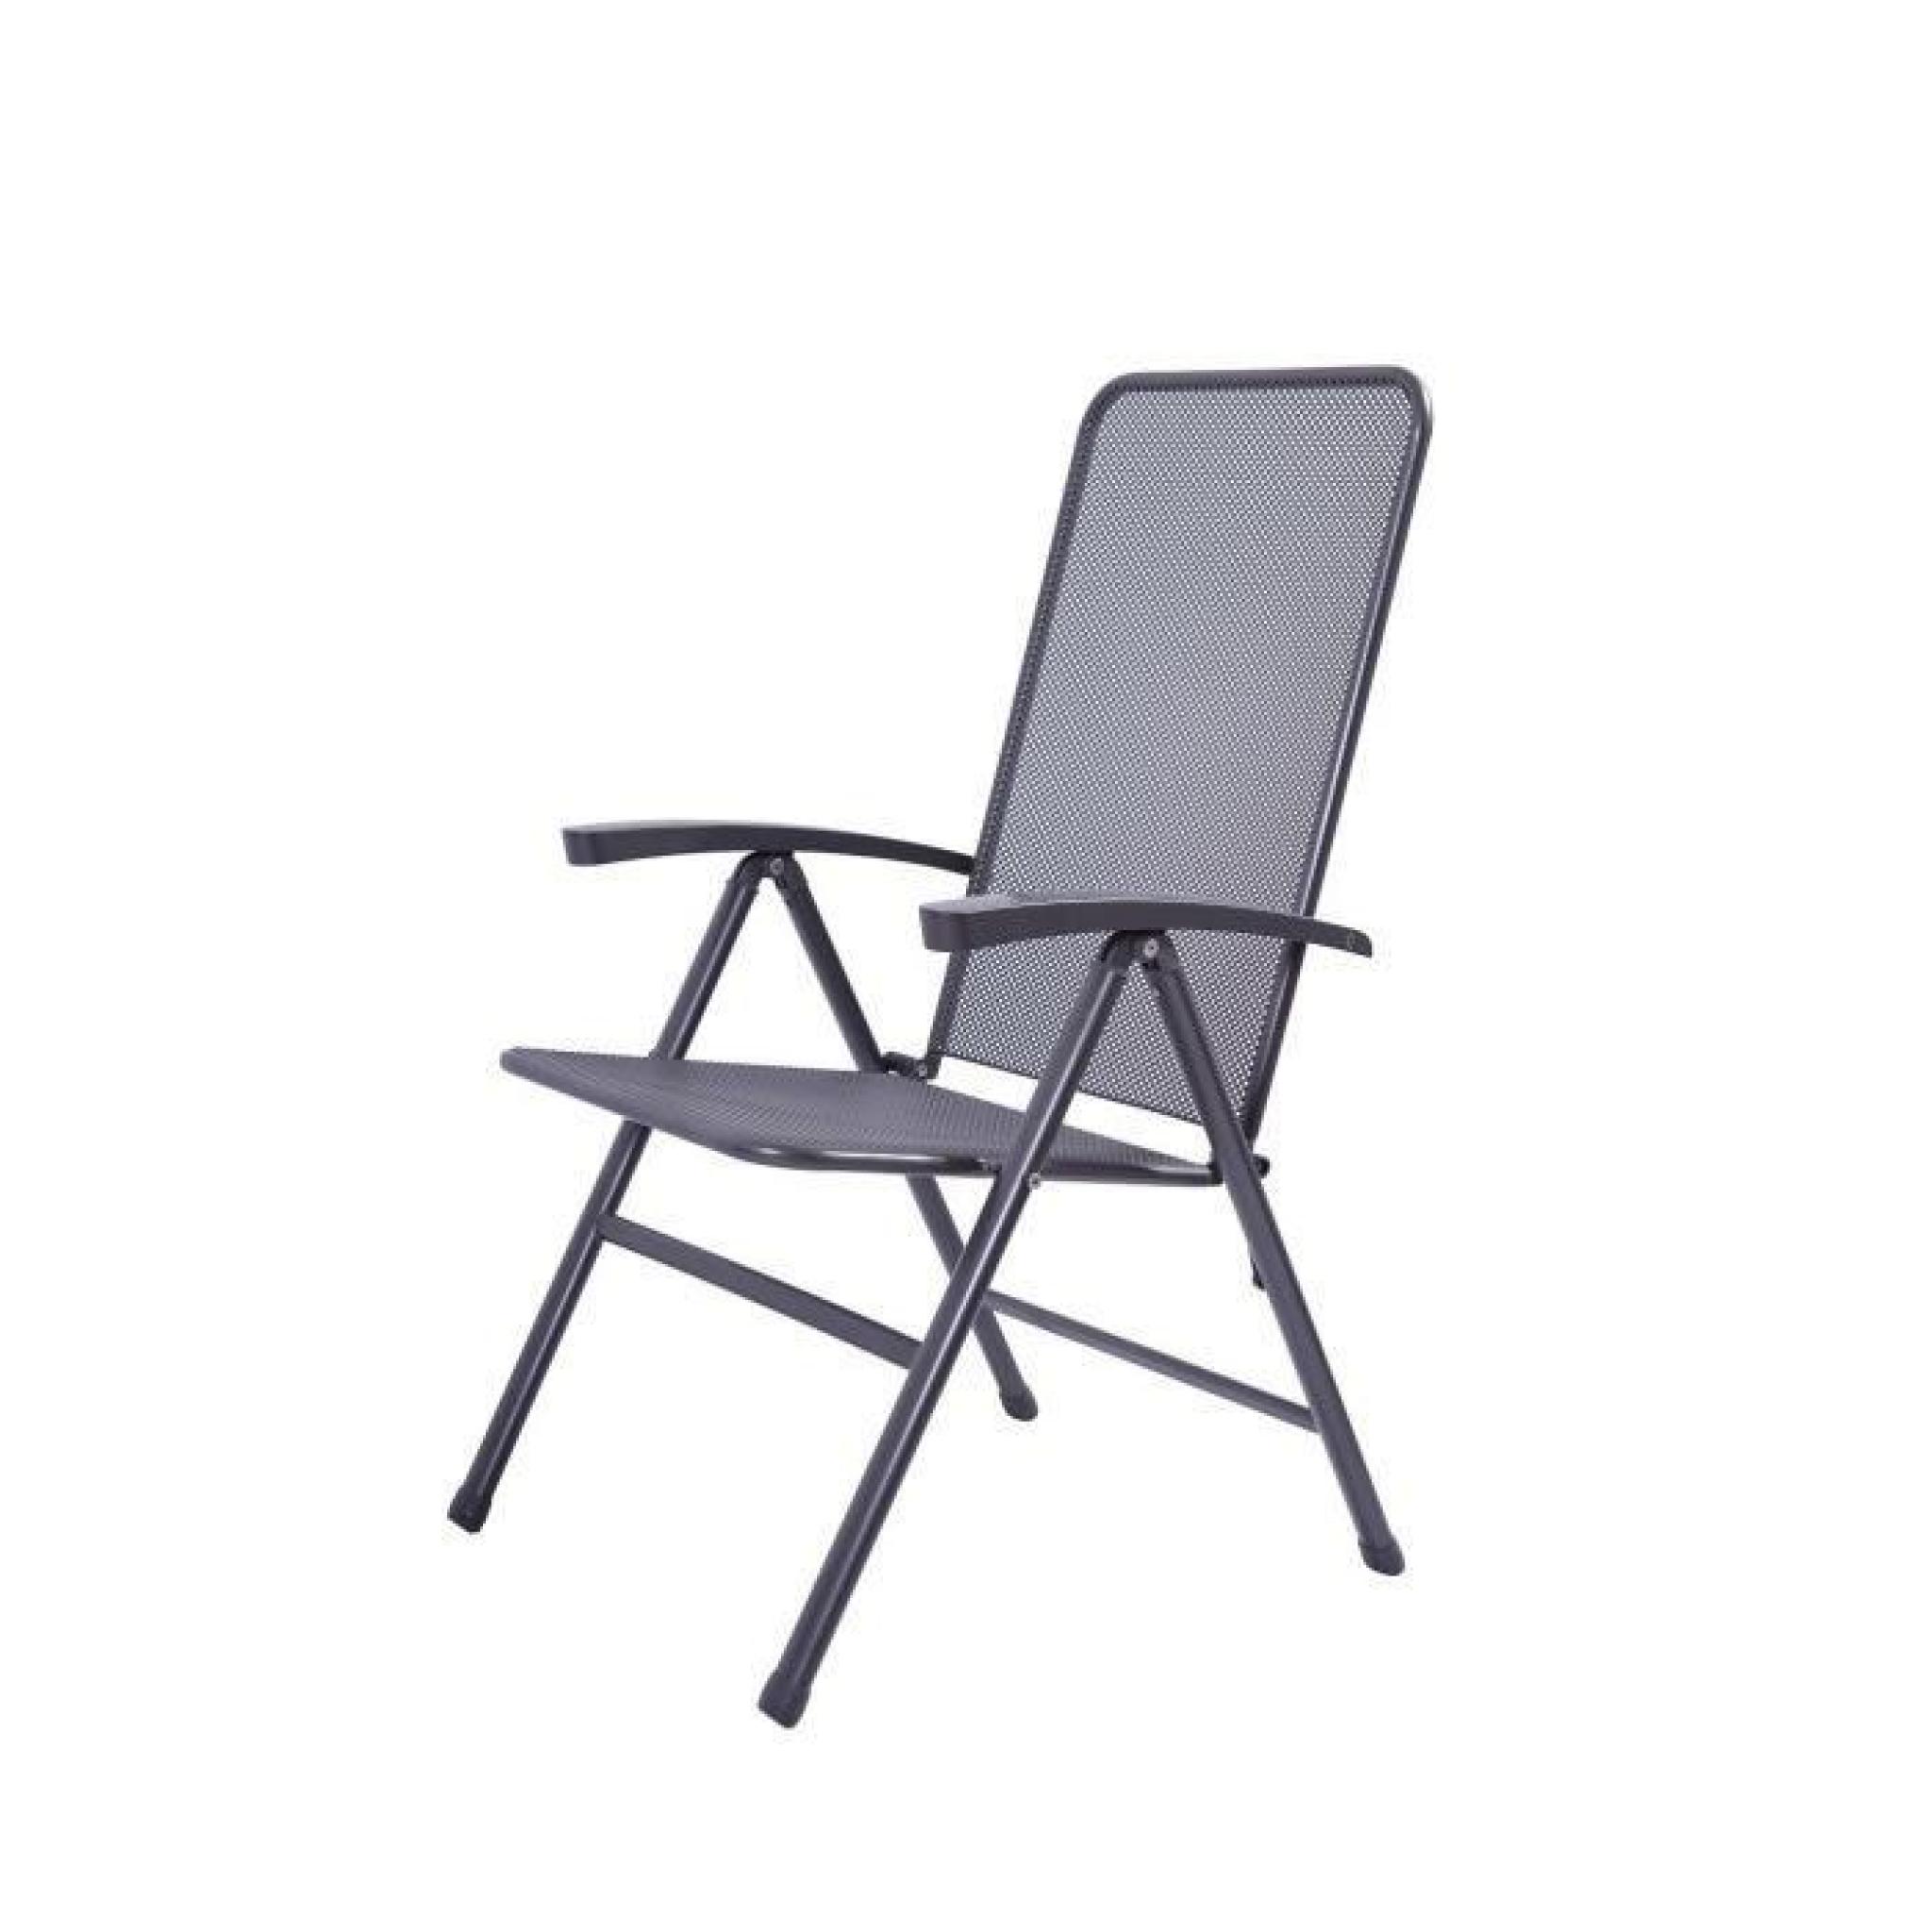 Chaise de jardin pliante fauteuil salon de jardin accoudoirs dossier haut bois épicéa huilé MARACANA